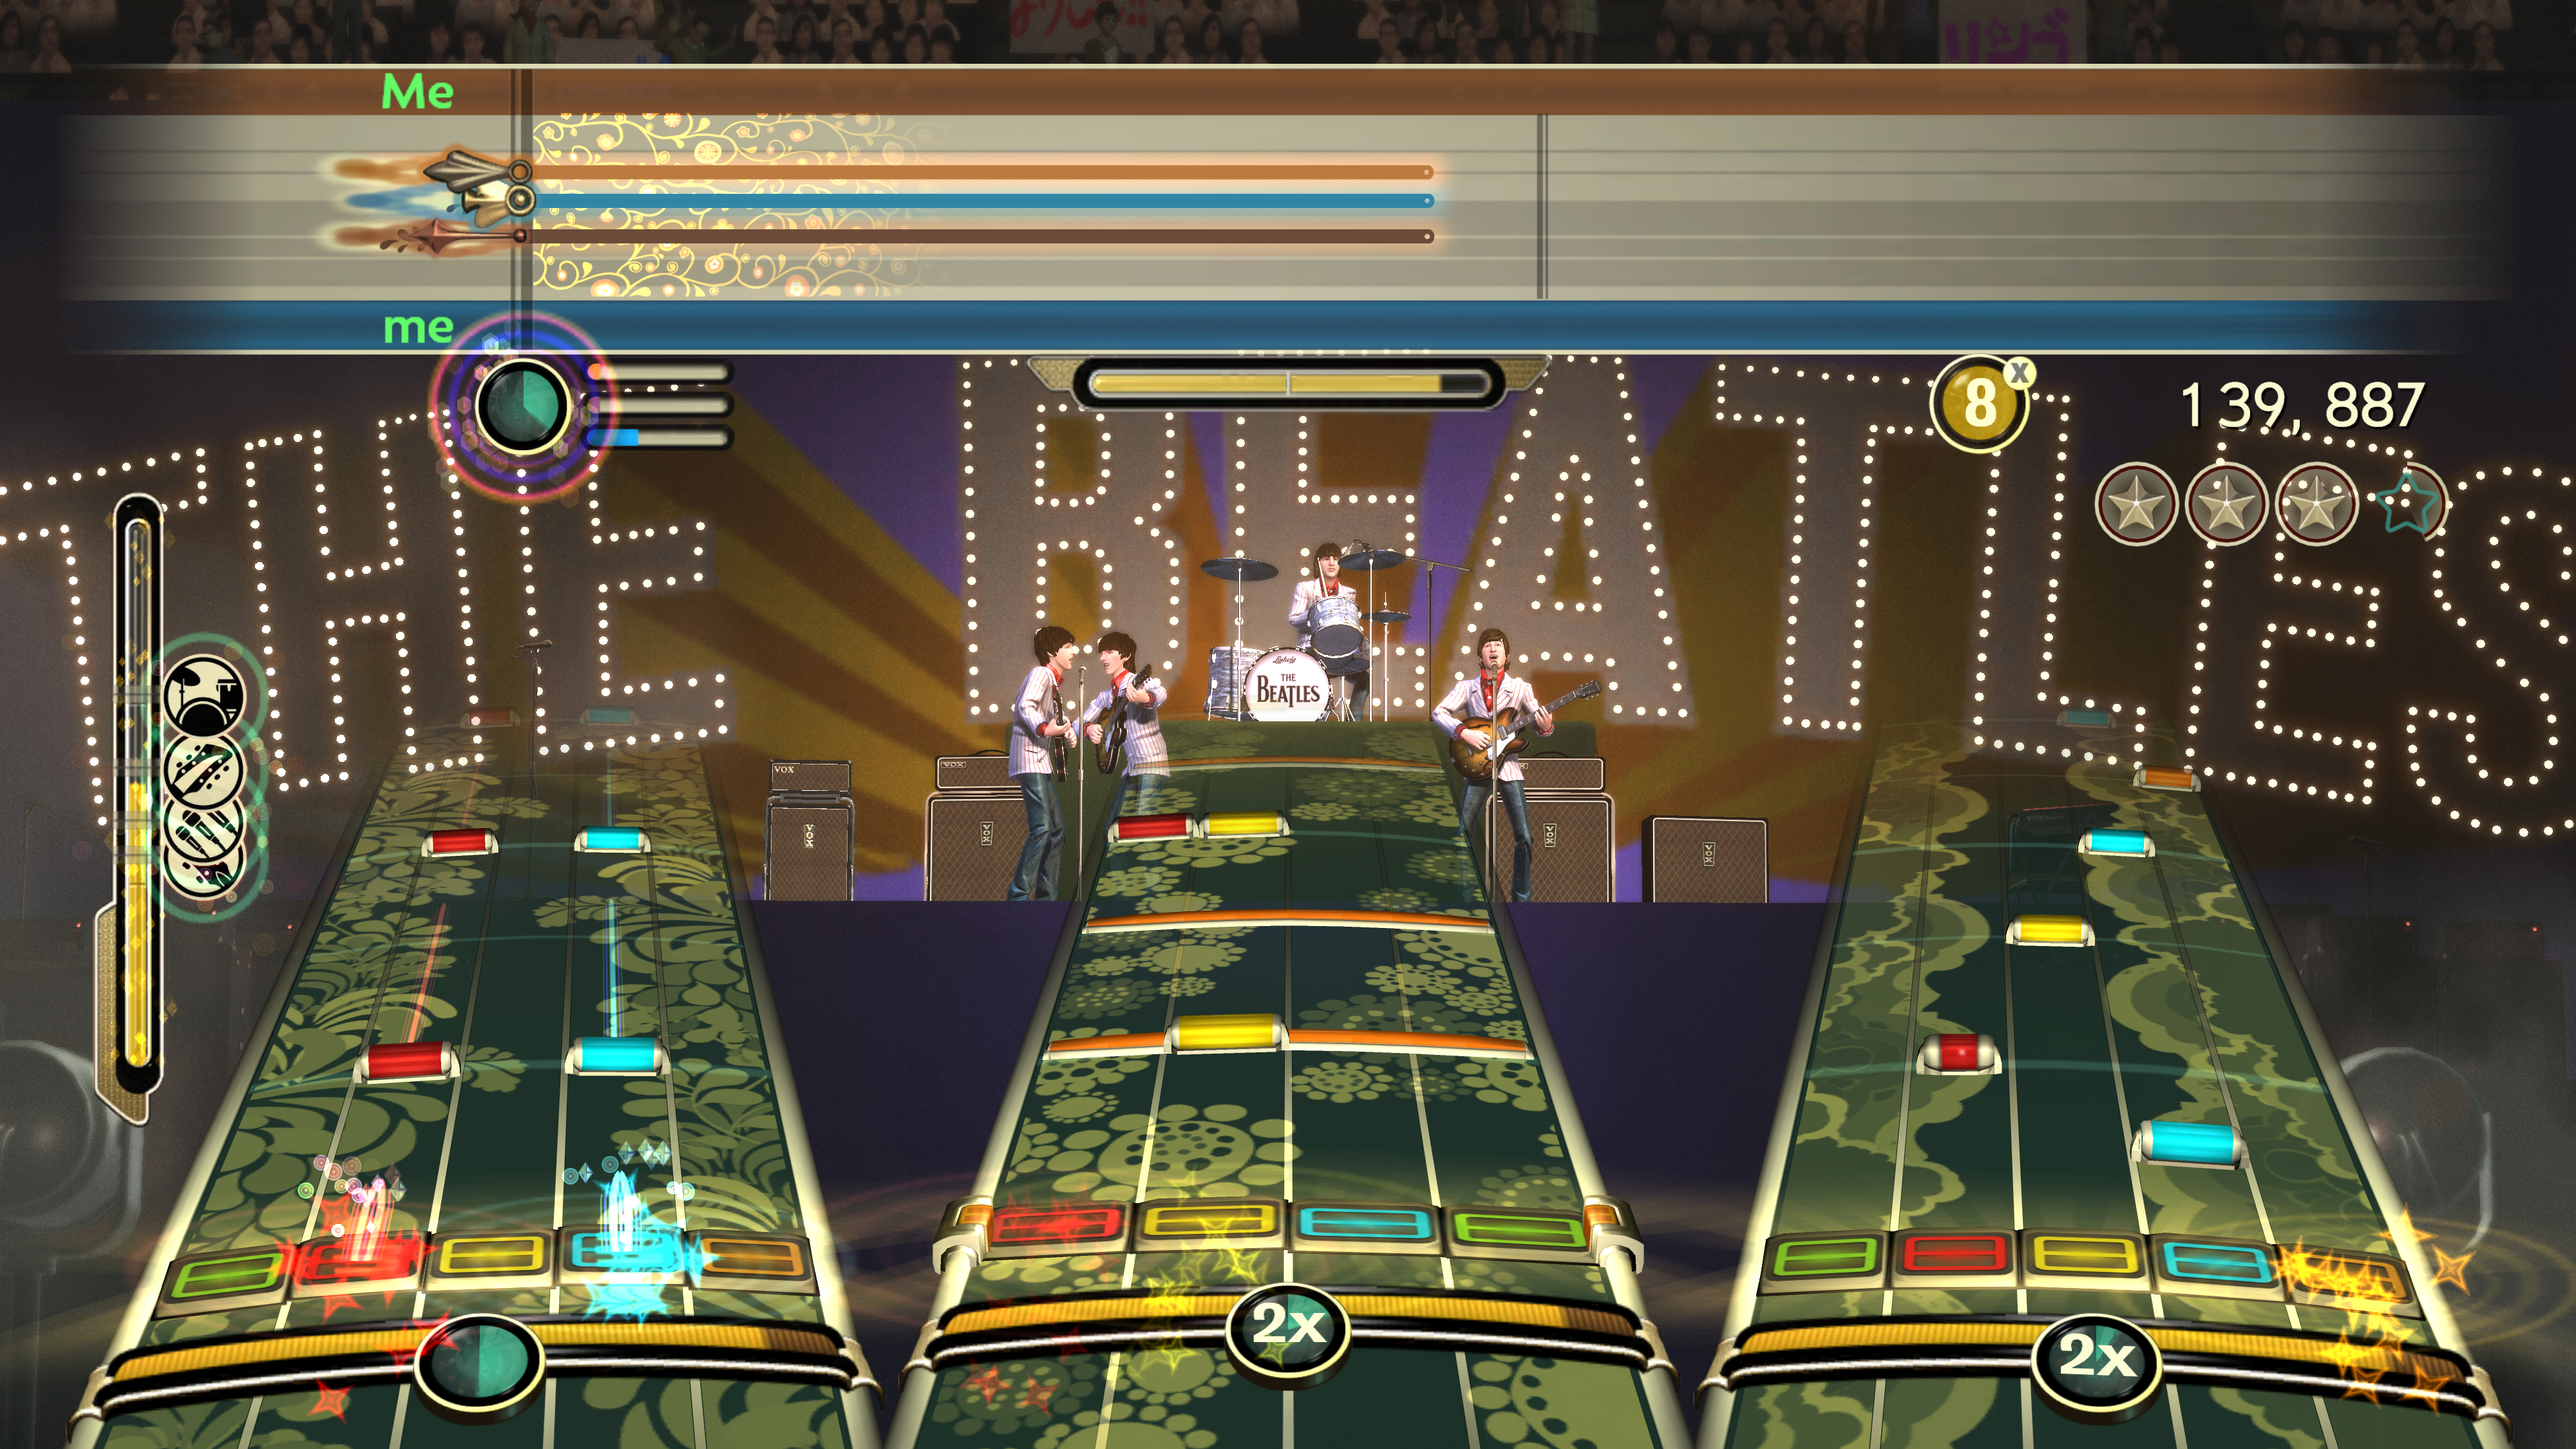 The Beatles Rock Band - PlayStation 3 - image 4 of 26